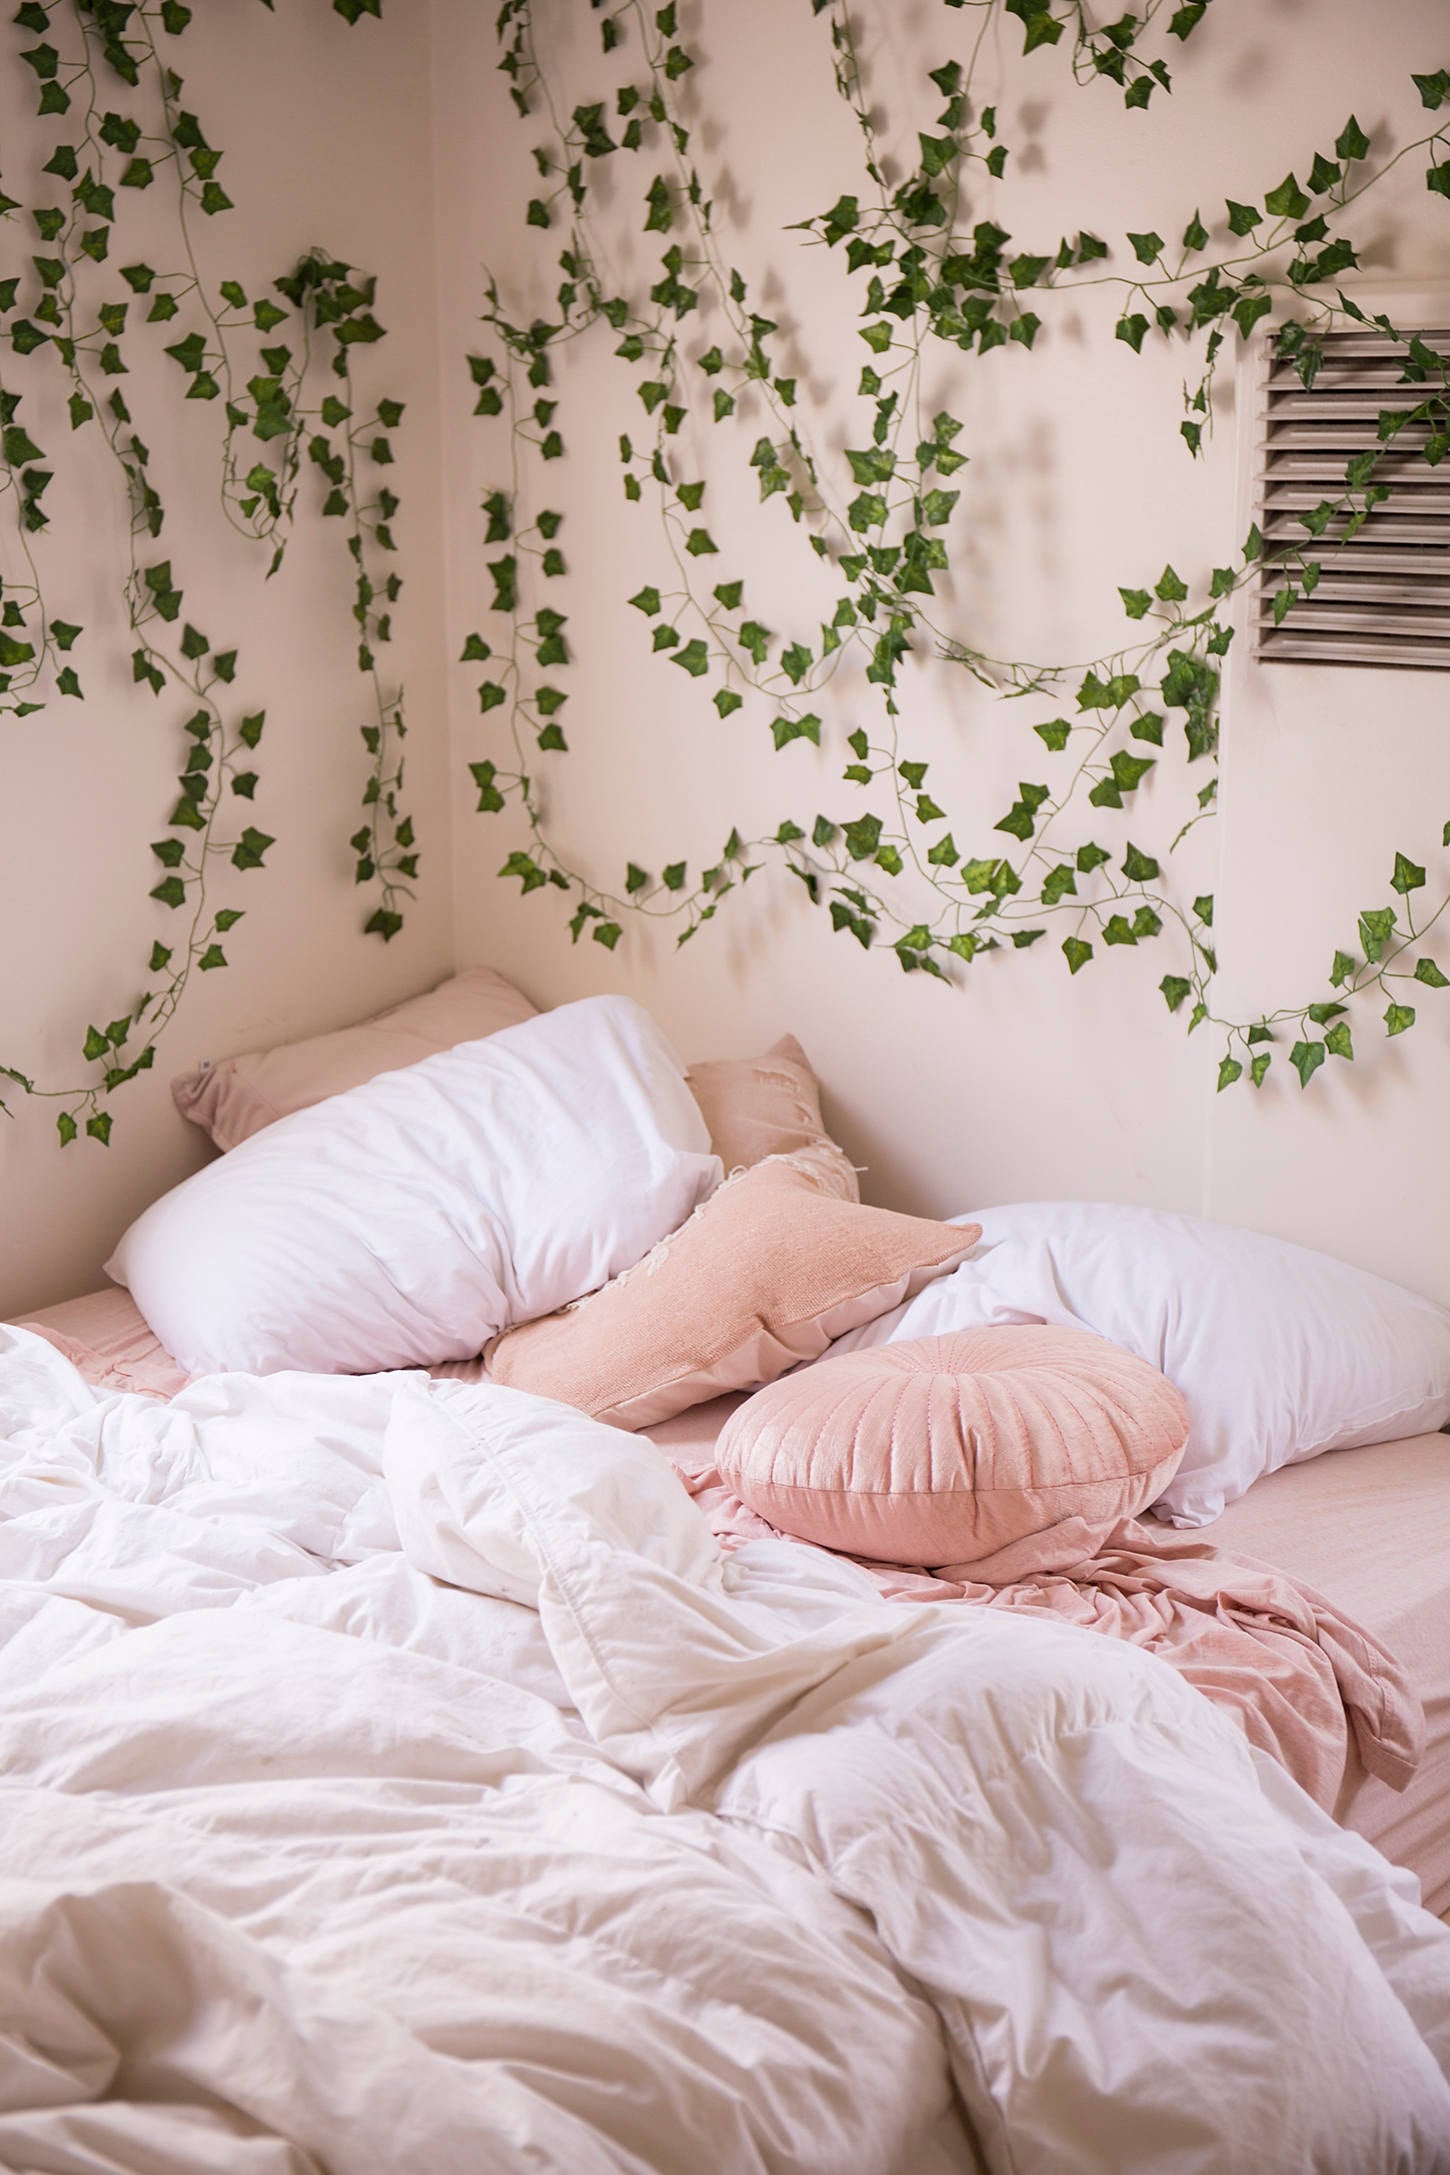 Most Stylish Bedroom Decor | POPSUGAR Home UK